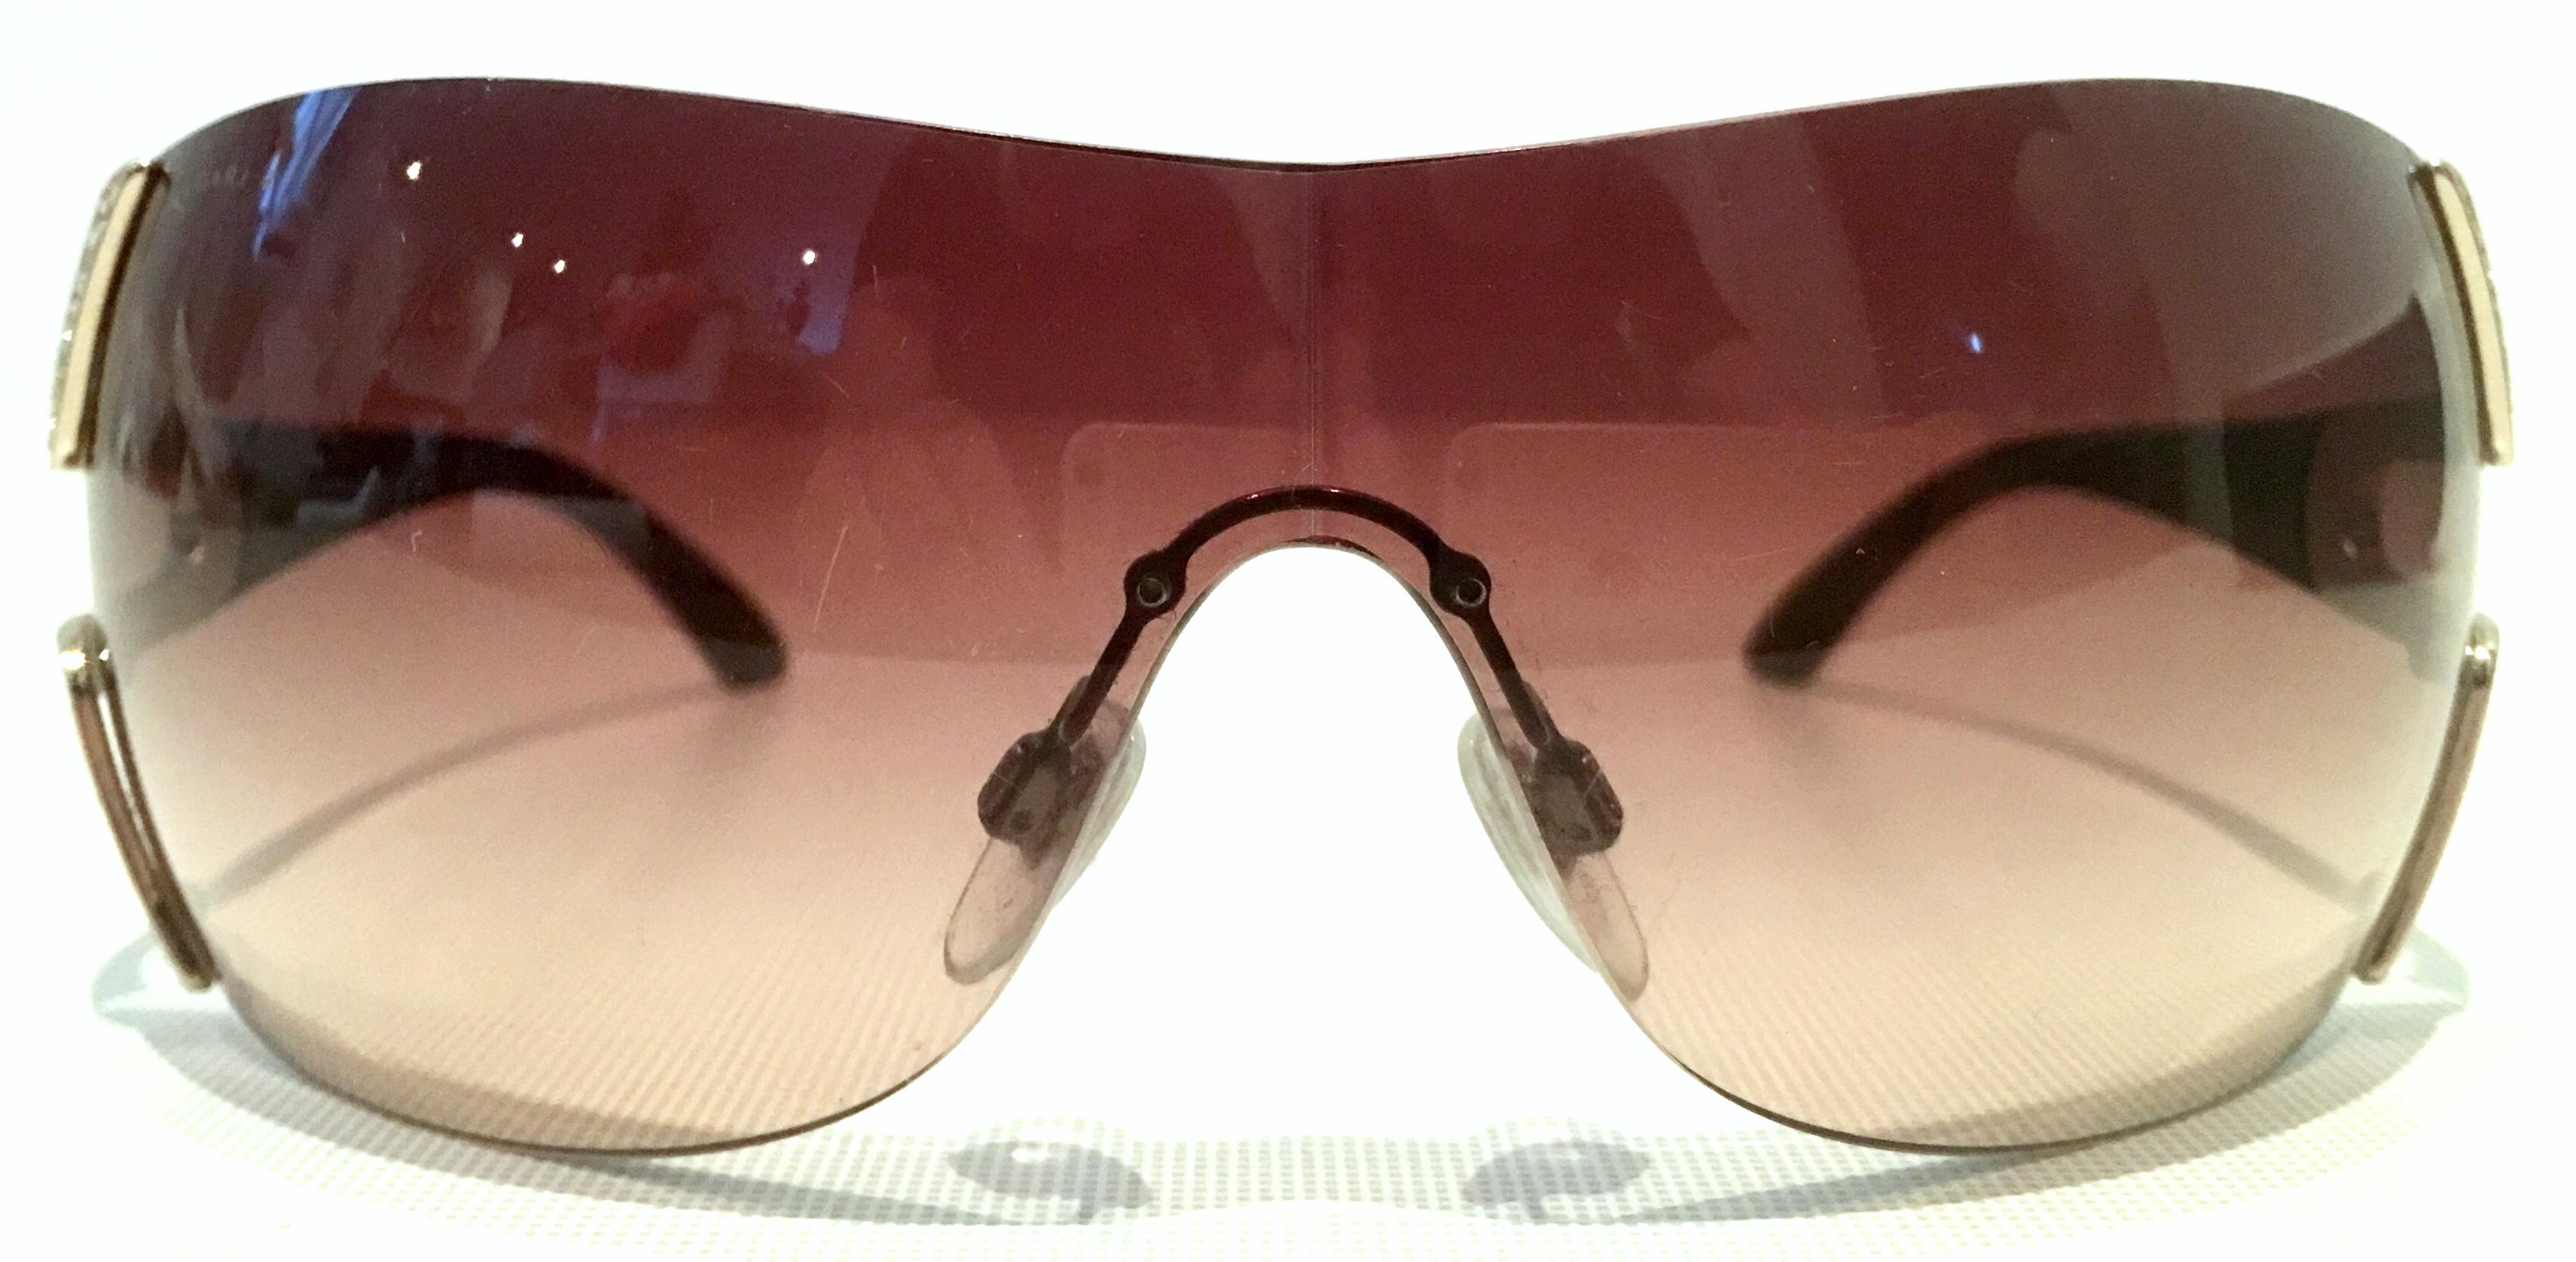 bvlgari sunglasses with swarovski crystals